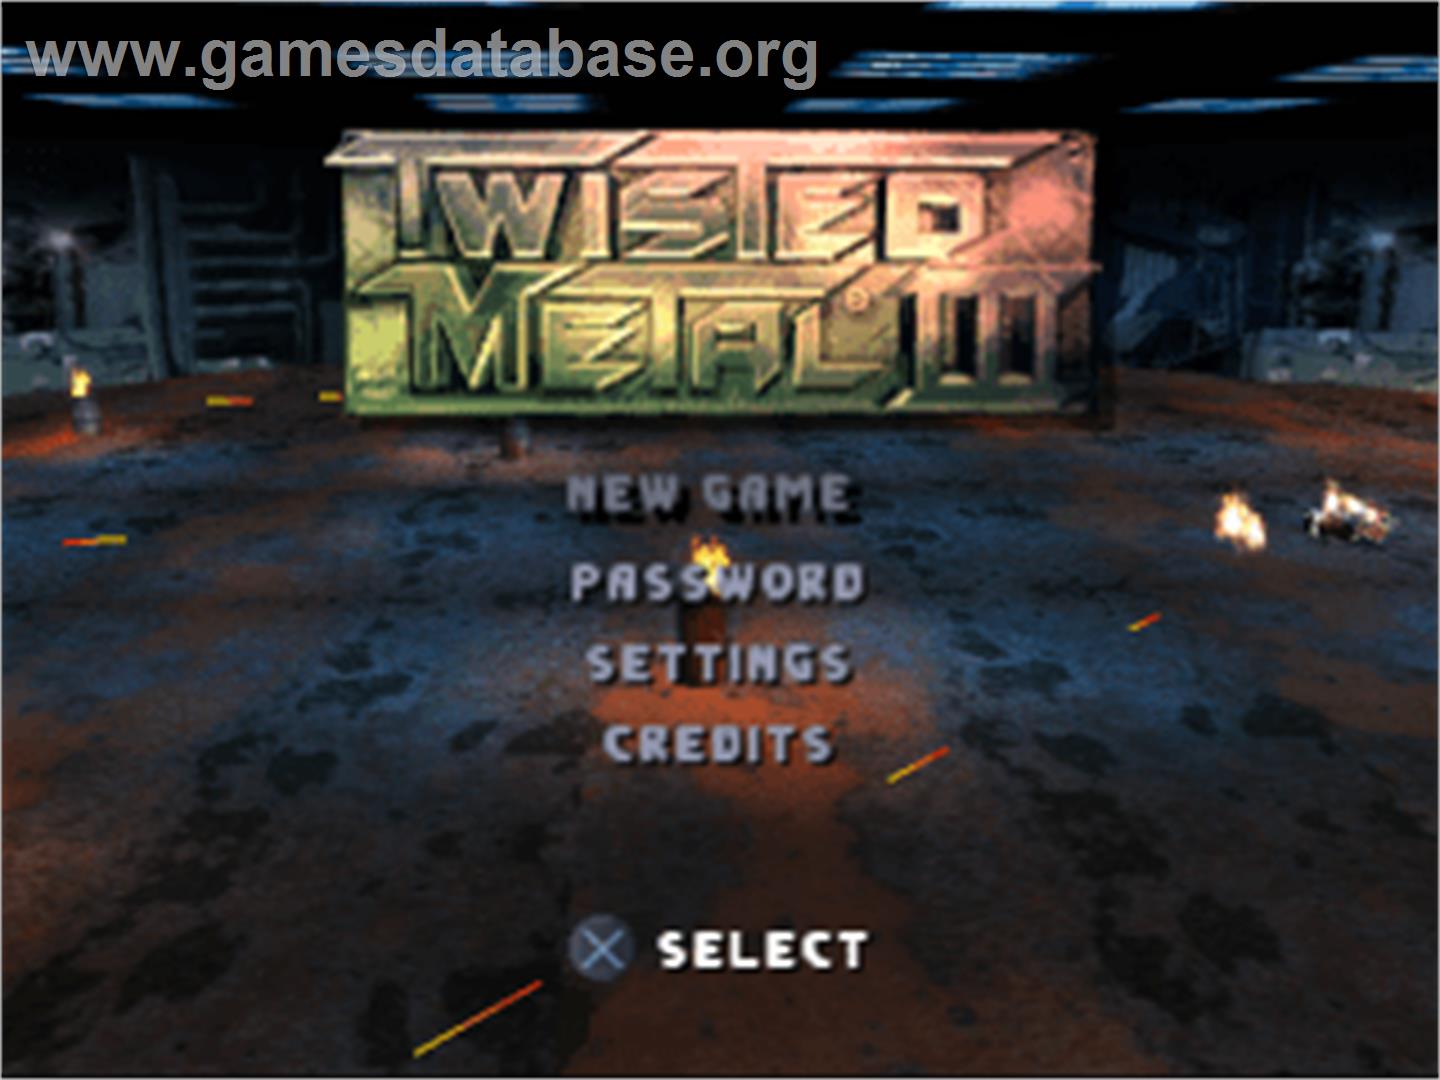 Twisted Metal III - Sony Playstation - Artwork - Title Screen